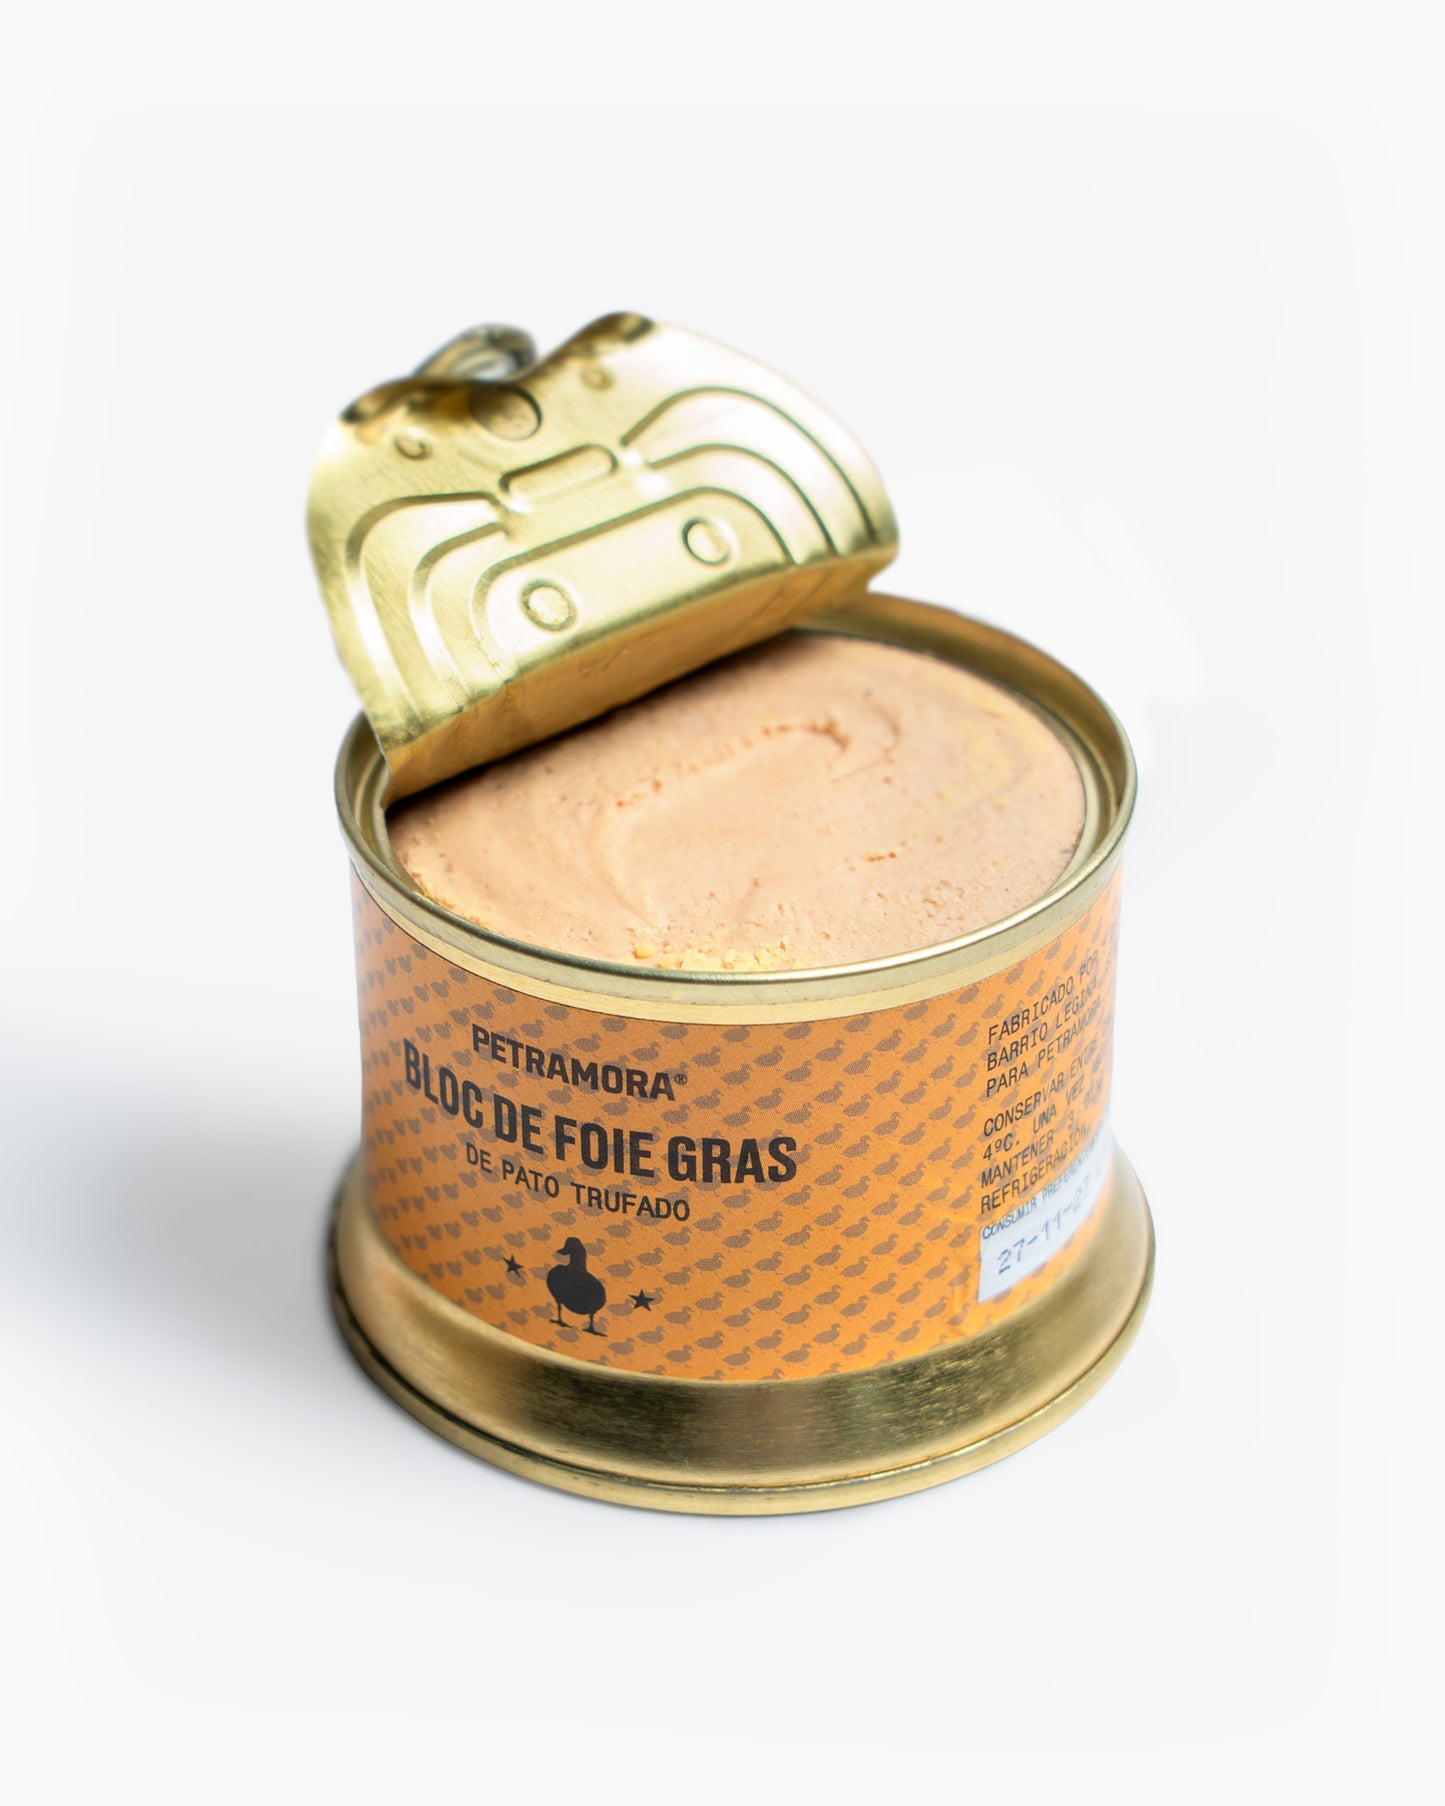 Bloc de foie gras de pato trufado 130 g